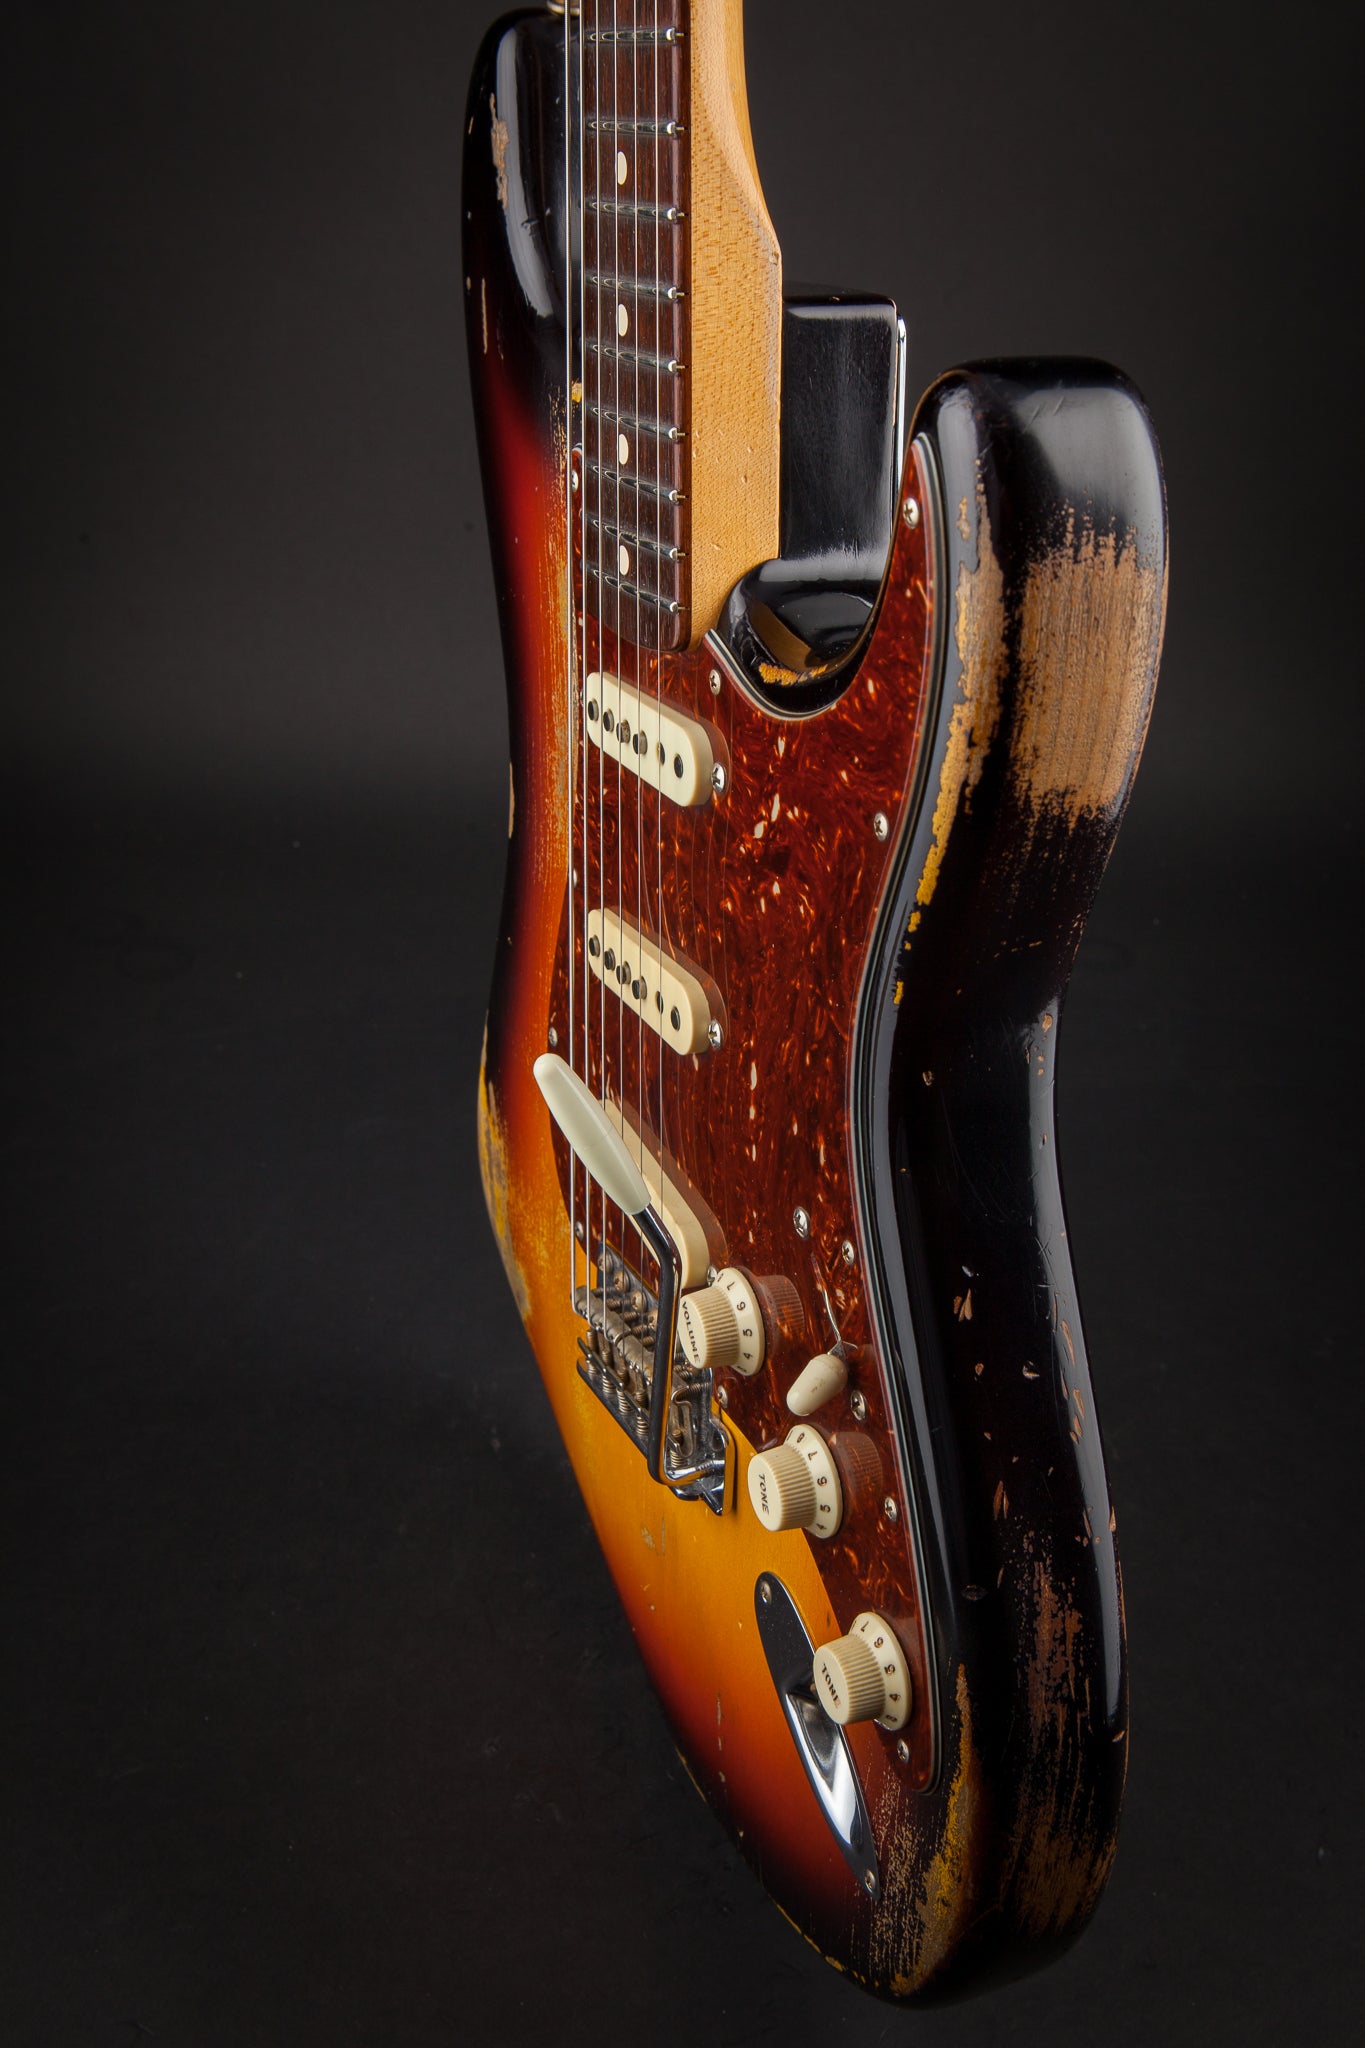 Fender Custom Shop: Stratocaster 63 Heavy Relic Faded 3 Tone Sunburst Master Built by Dennis Galuszka #R89197